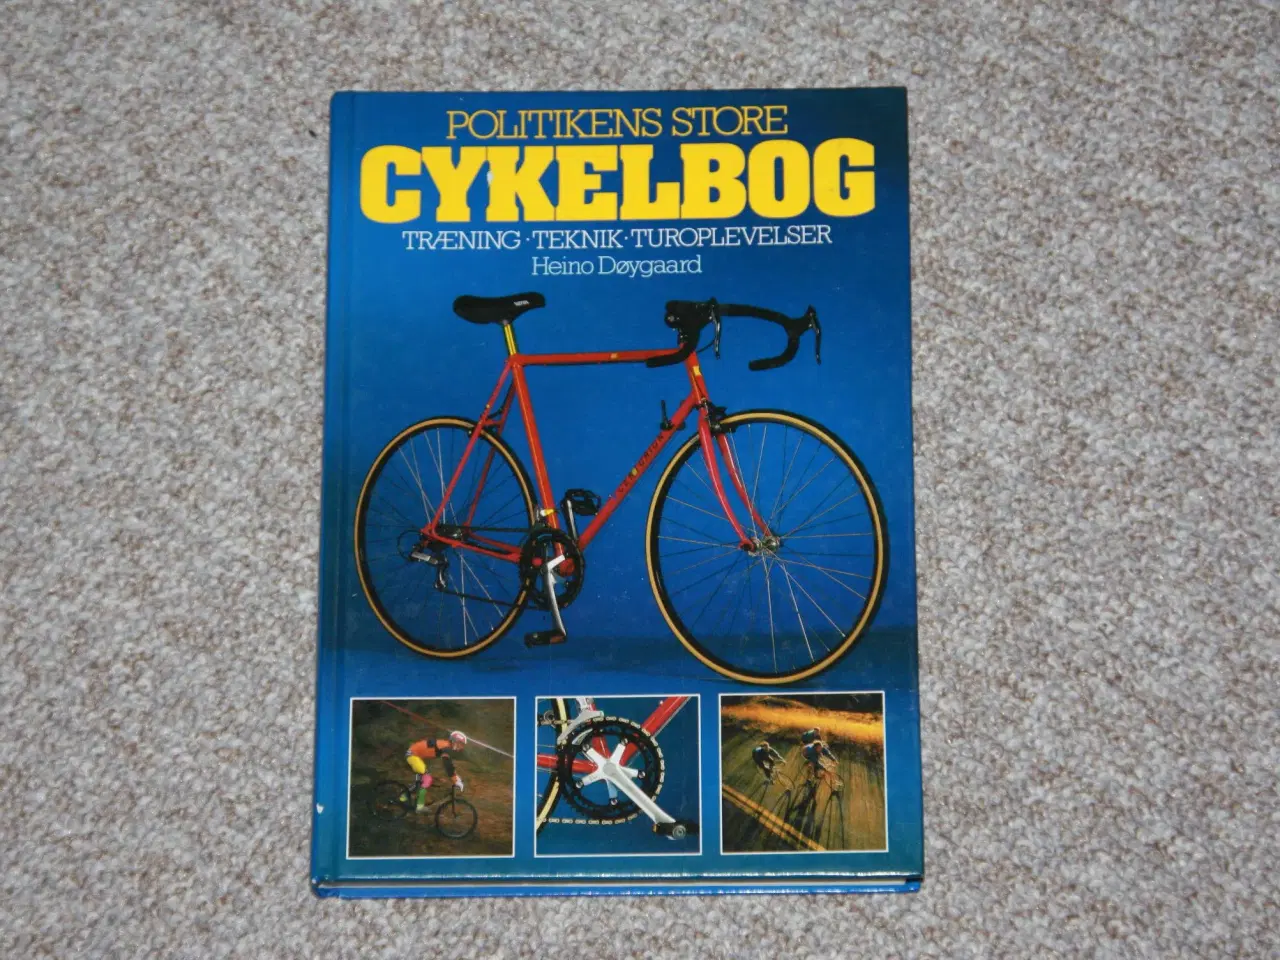 Billede 1 - Politikens store cykelbog af Heino Døygaard